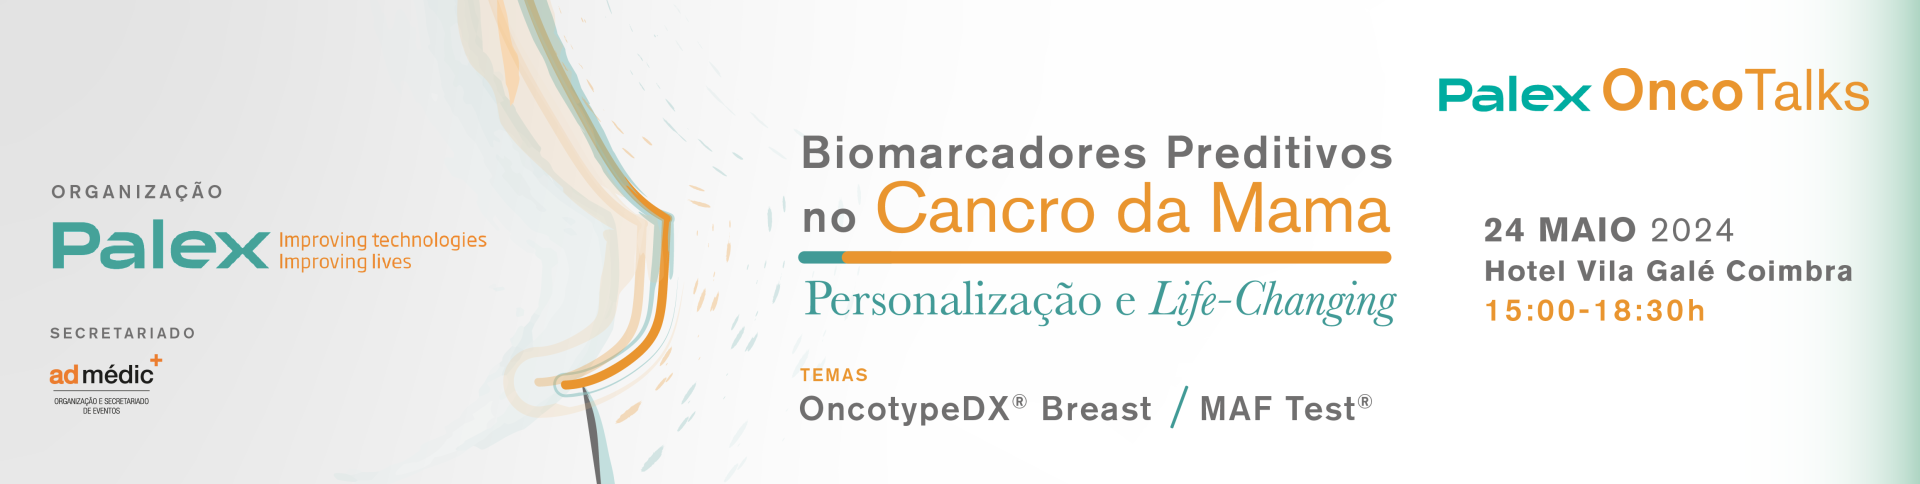 Palex OncoTalks  Biomarcadores Preditivos no Cancro da Mama 